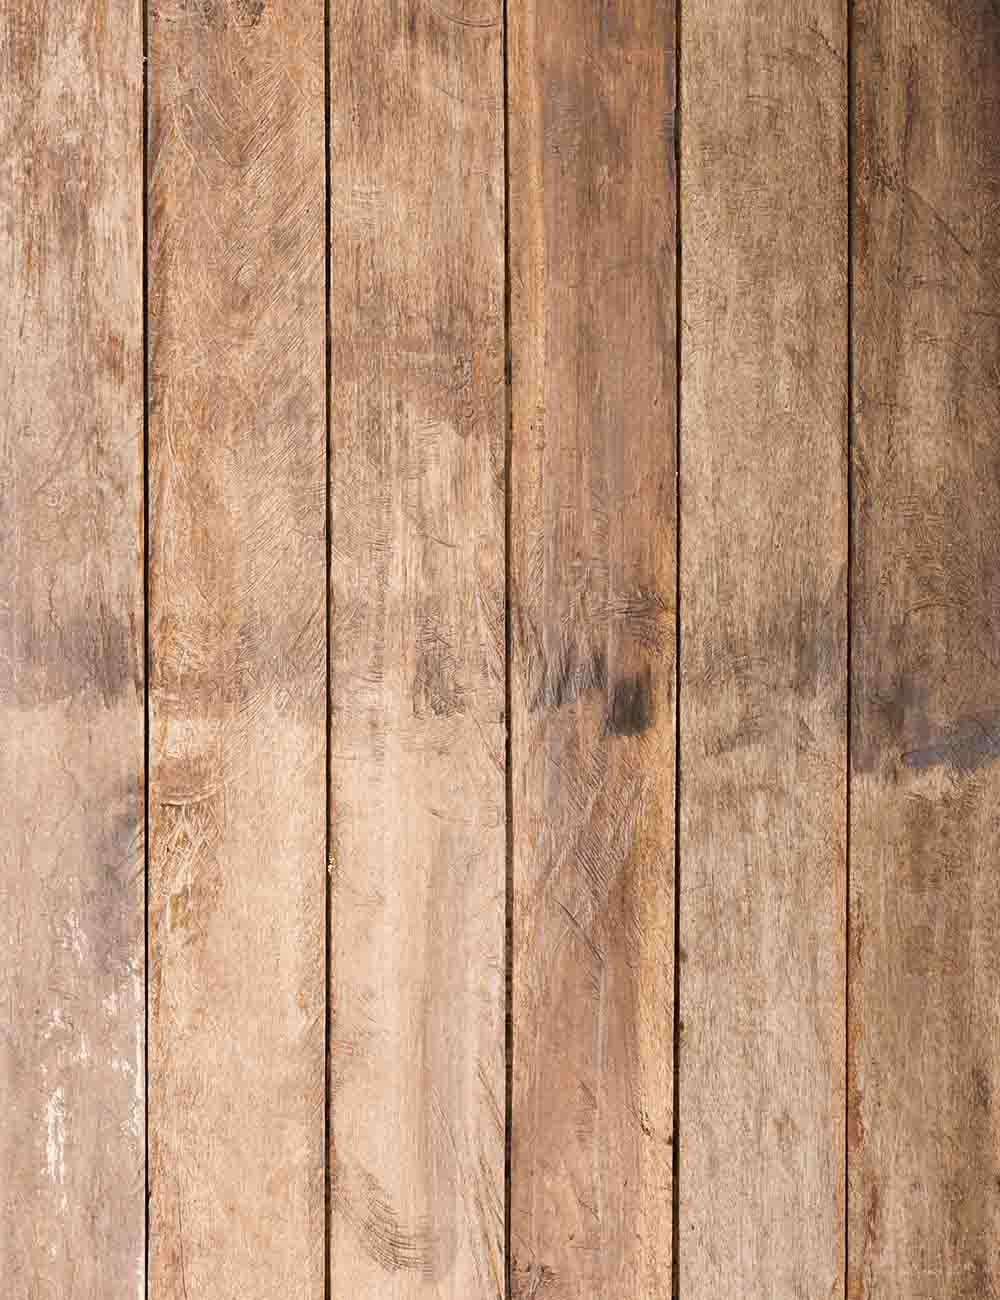 Brown Pinewood Floor Texture Backdrop For Studio Photo Shopbackdrop